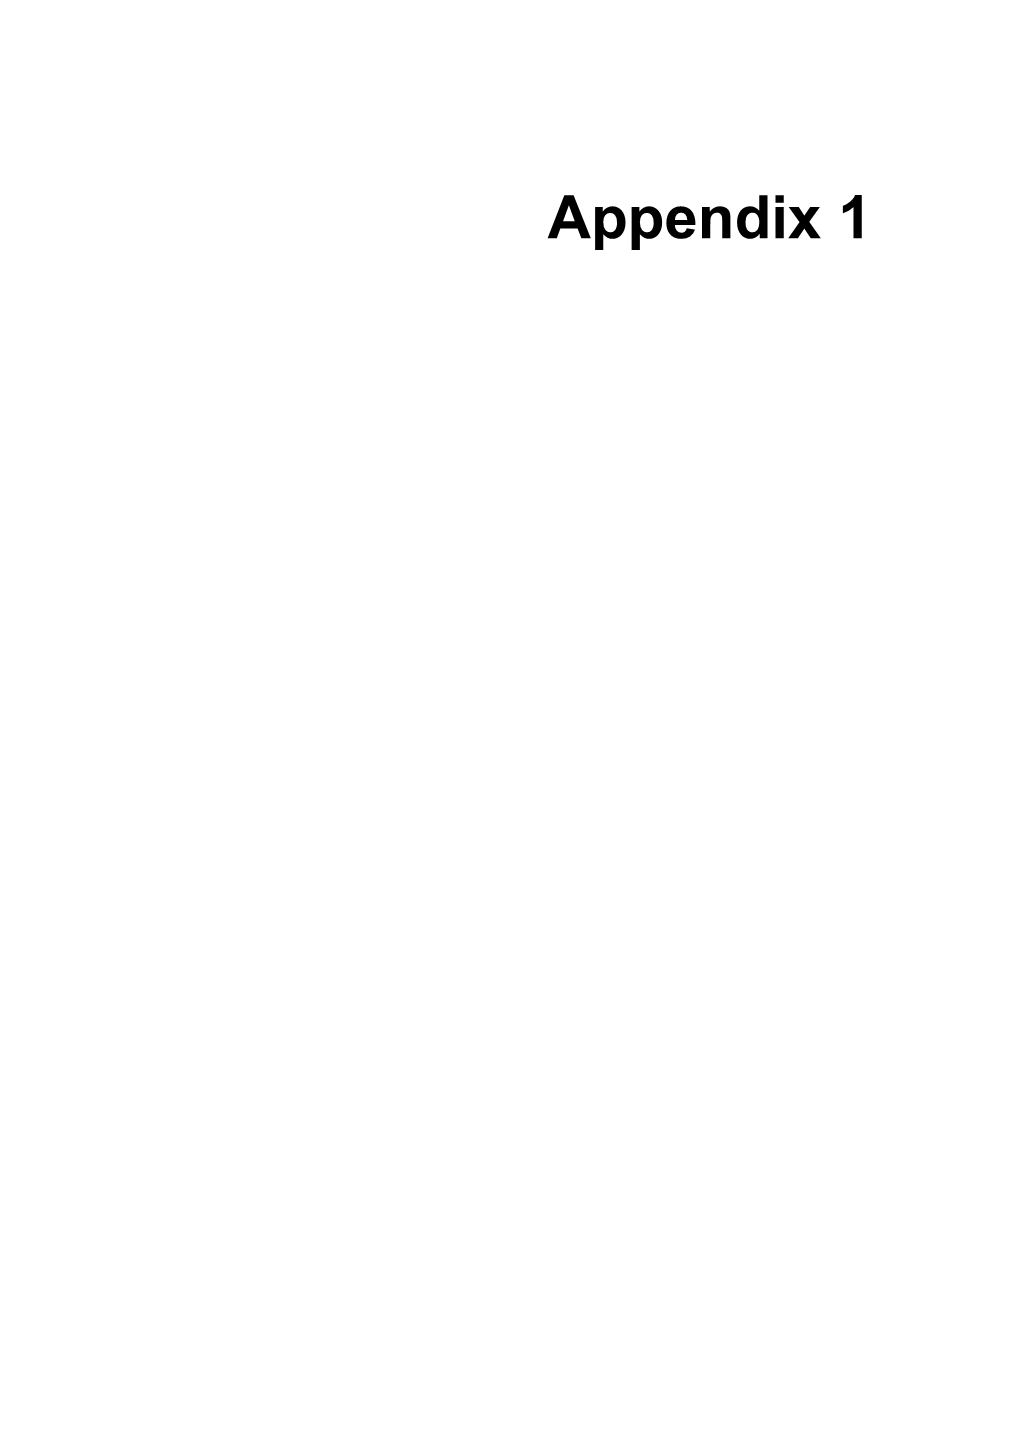 Troxy 3 Appendices Only , Item 3.3 PDF 2 MB